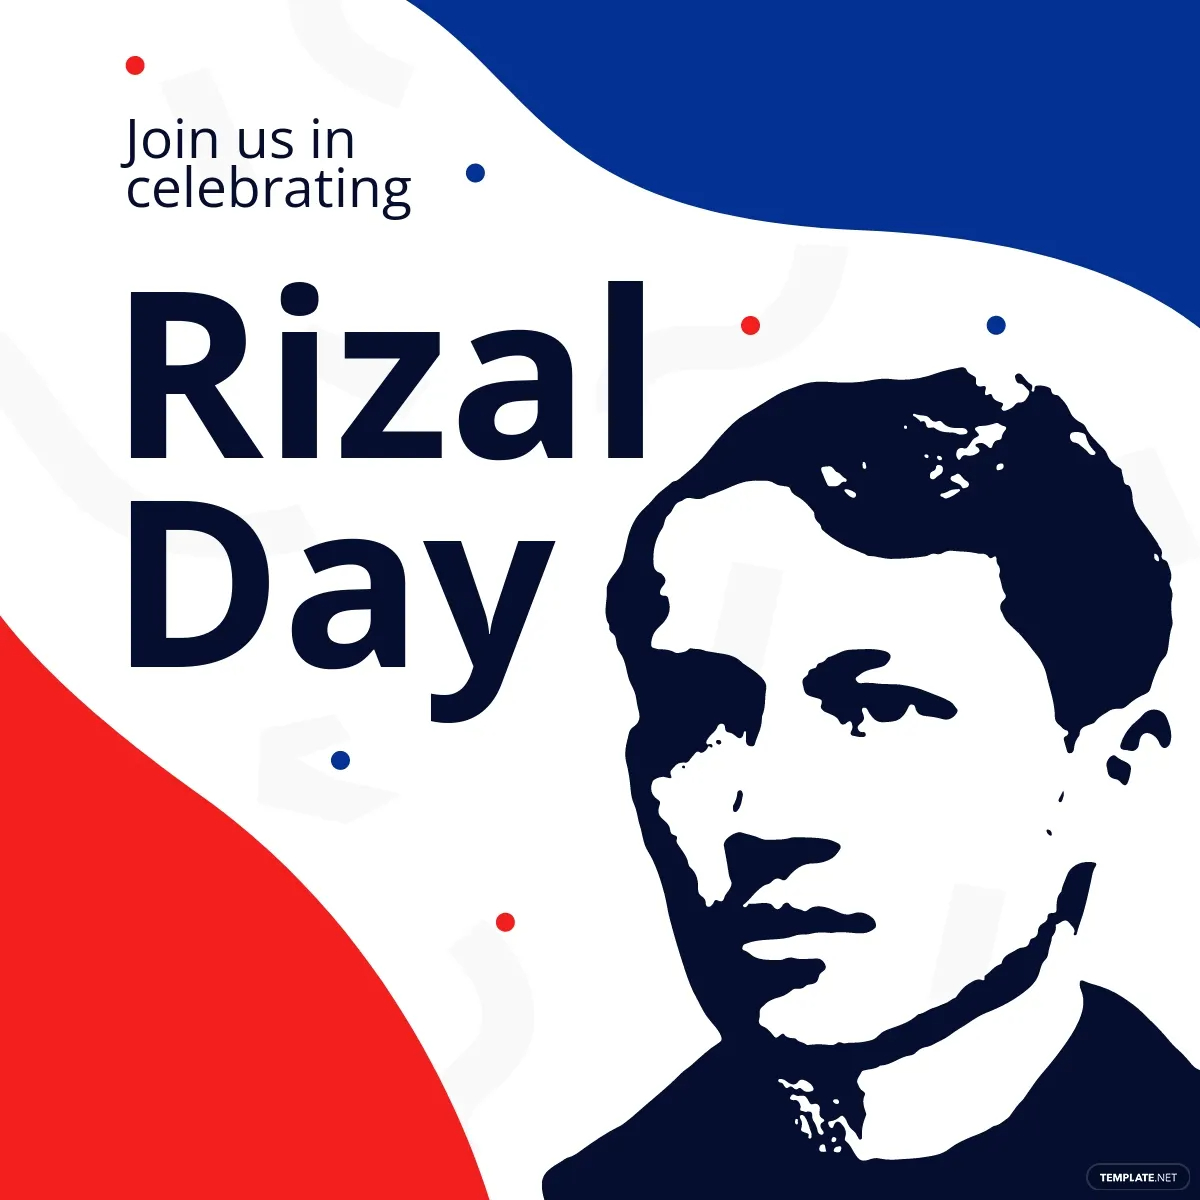 rizal-day-celebration-linkedin-post